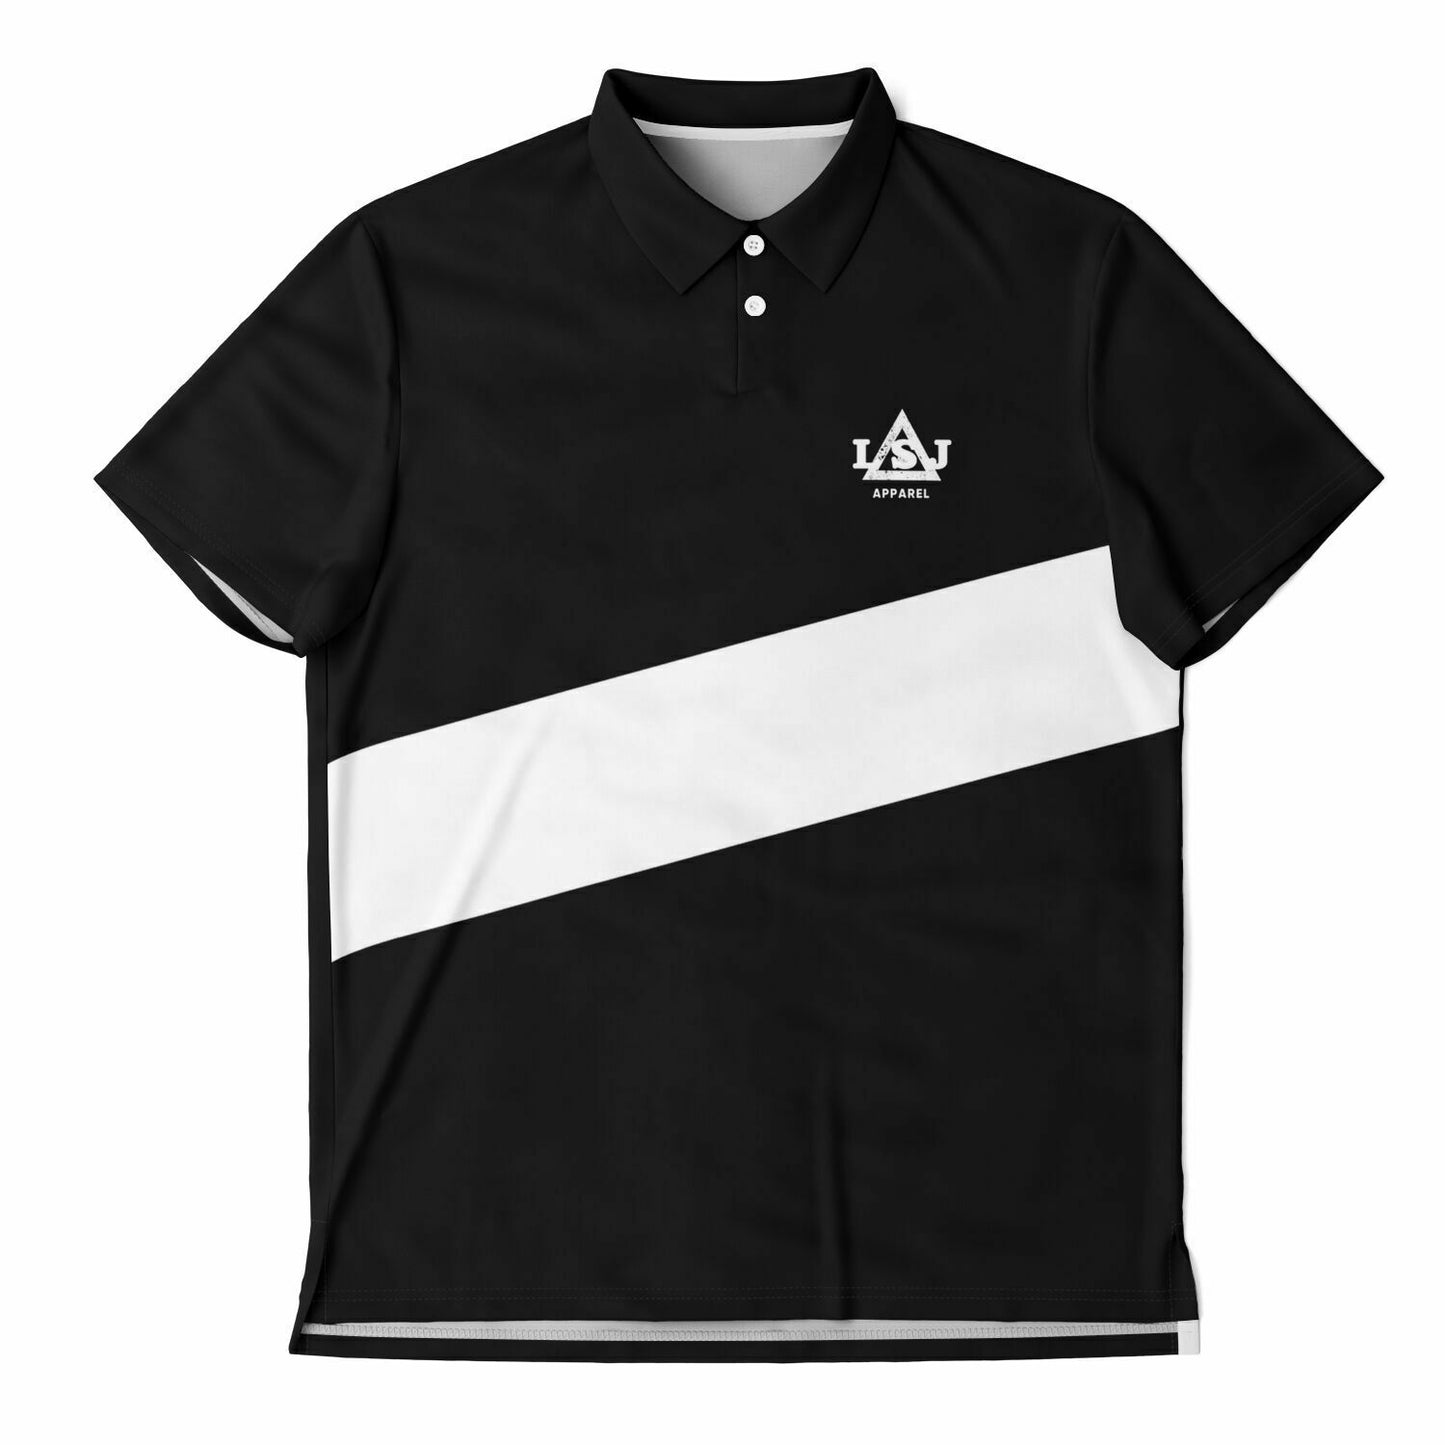 LSJ Black & White Men's Polo Shirt